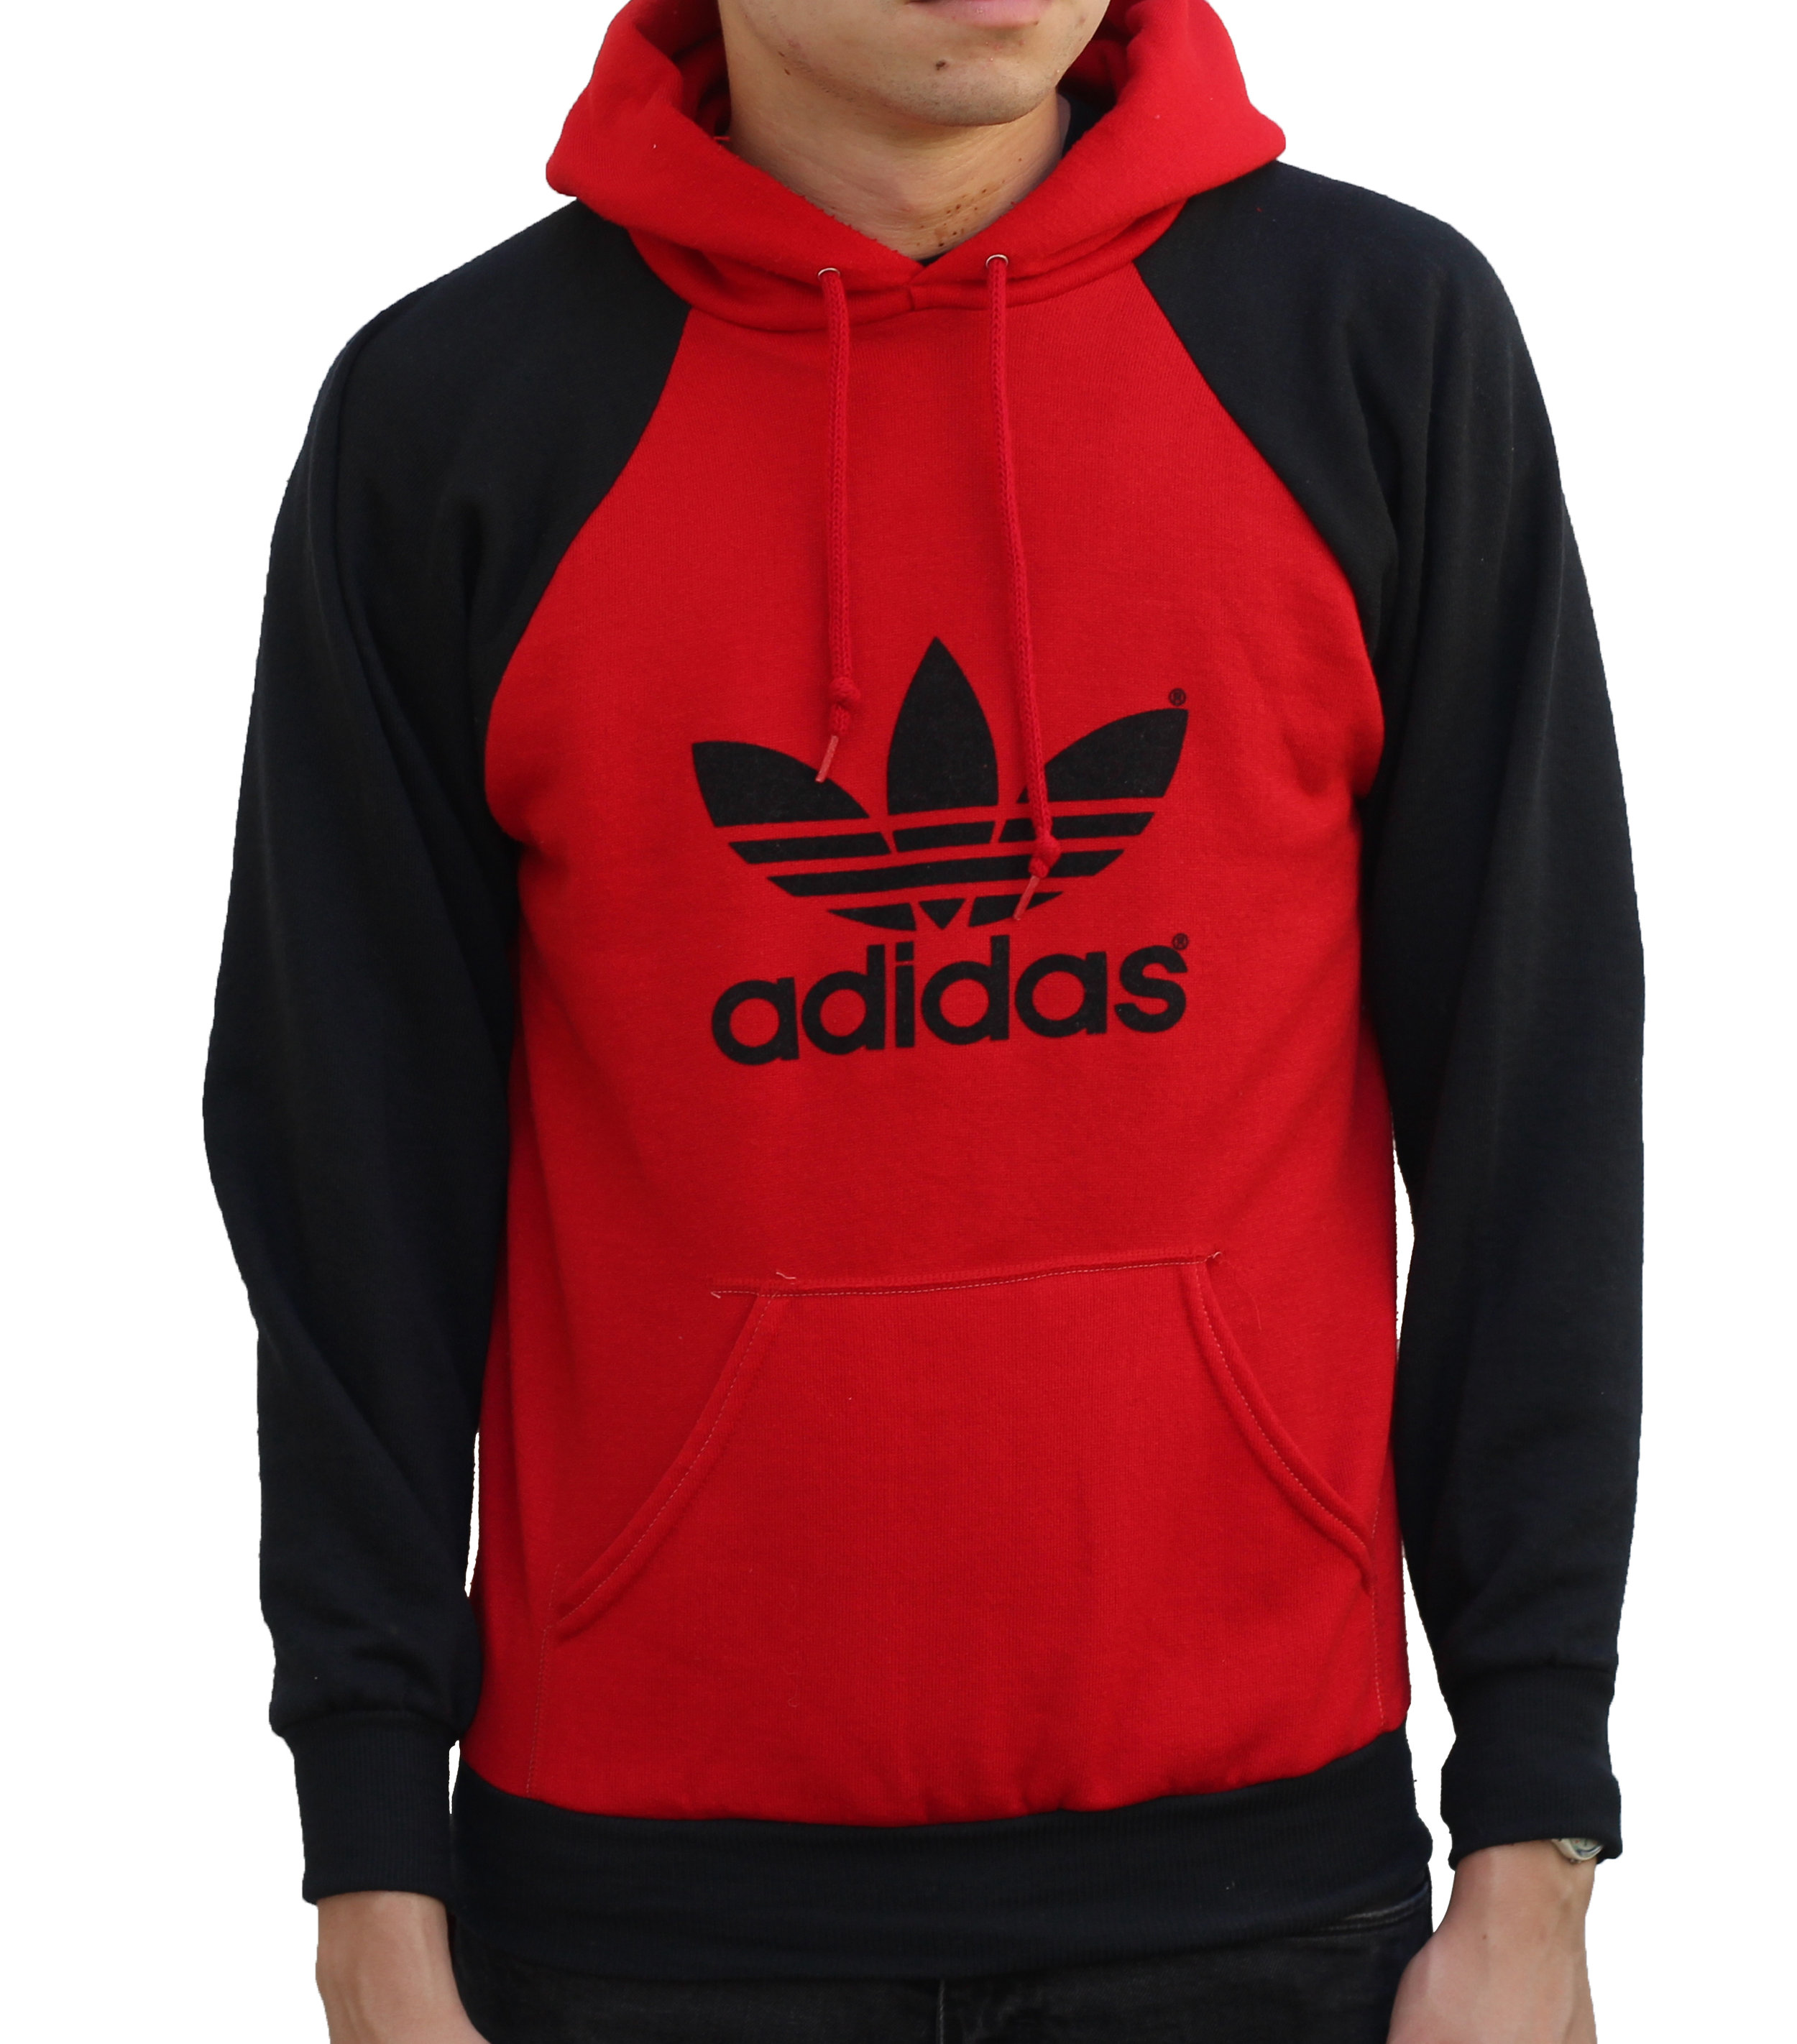 red and black adidas hoodie